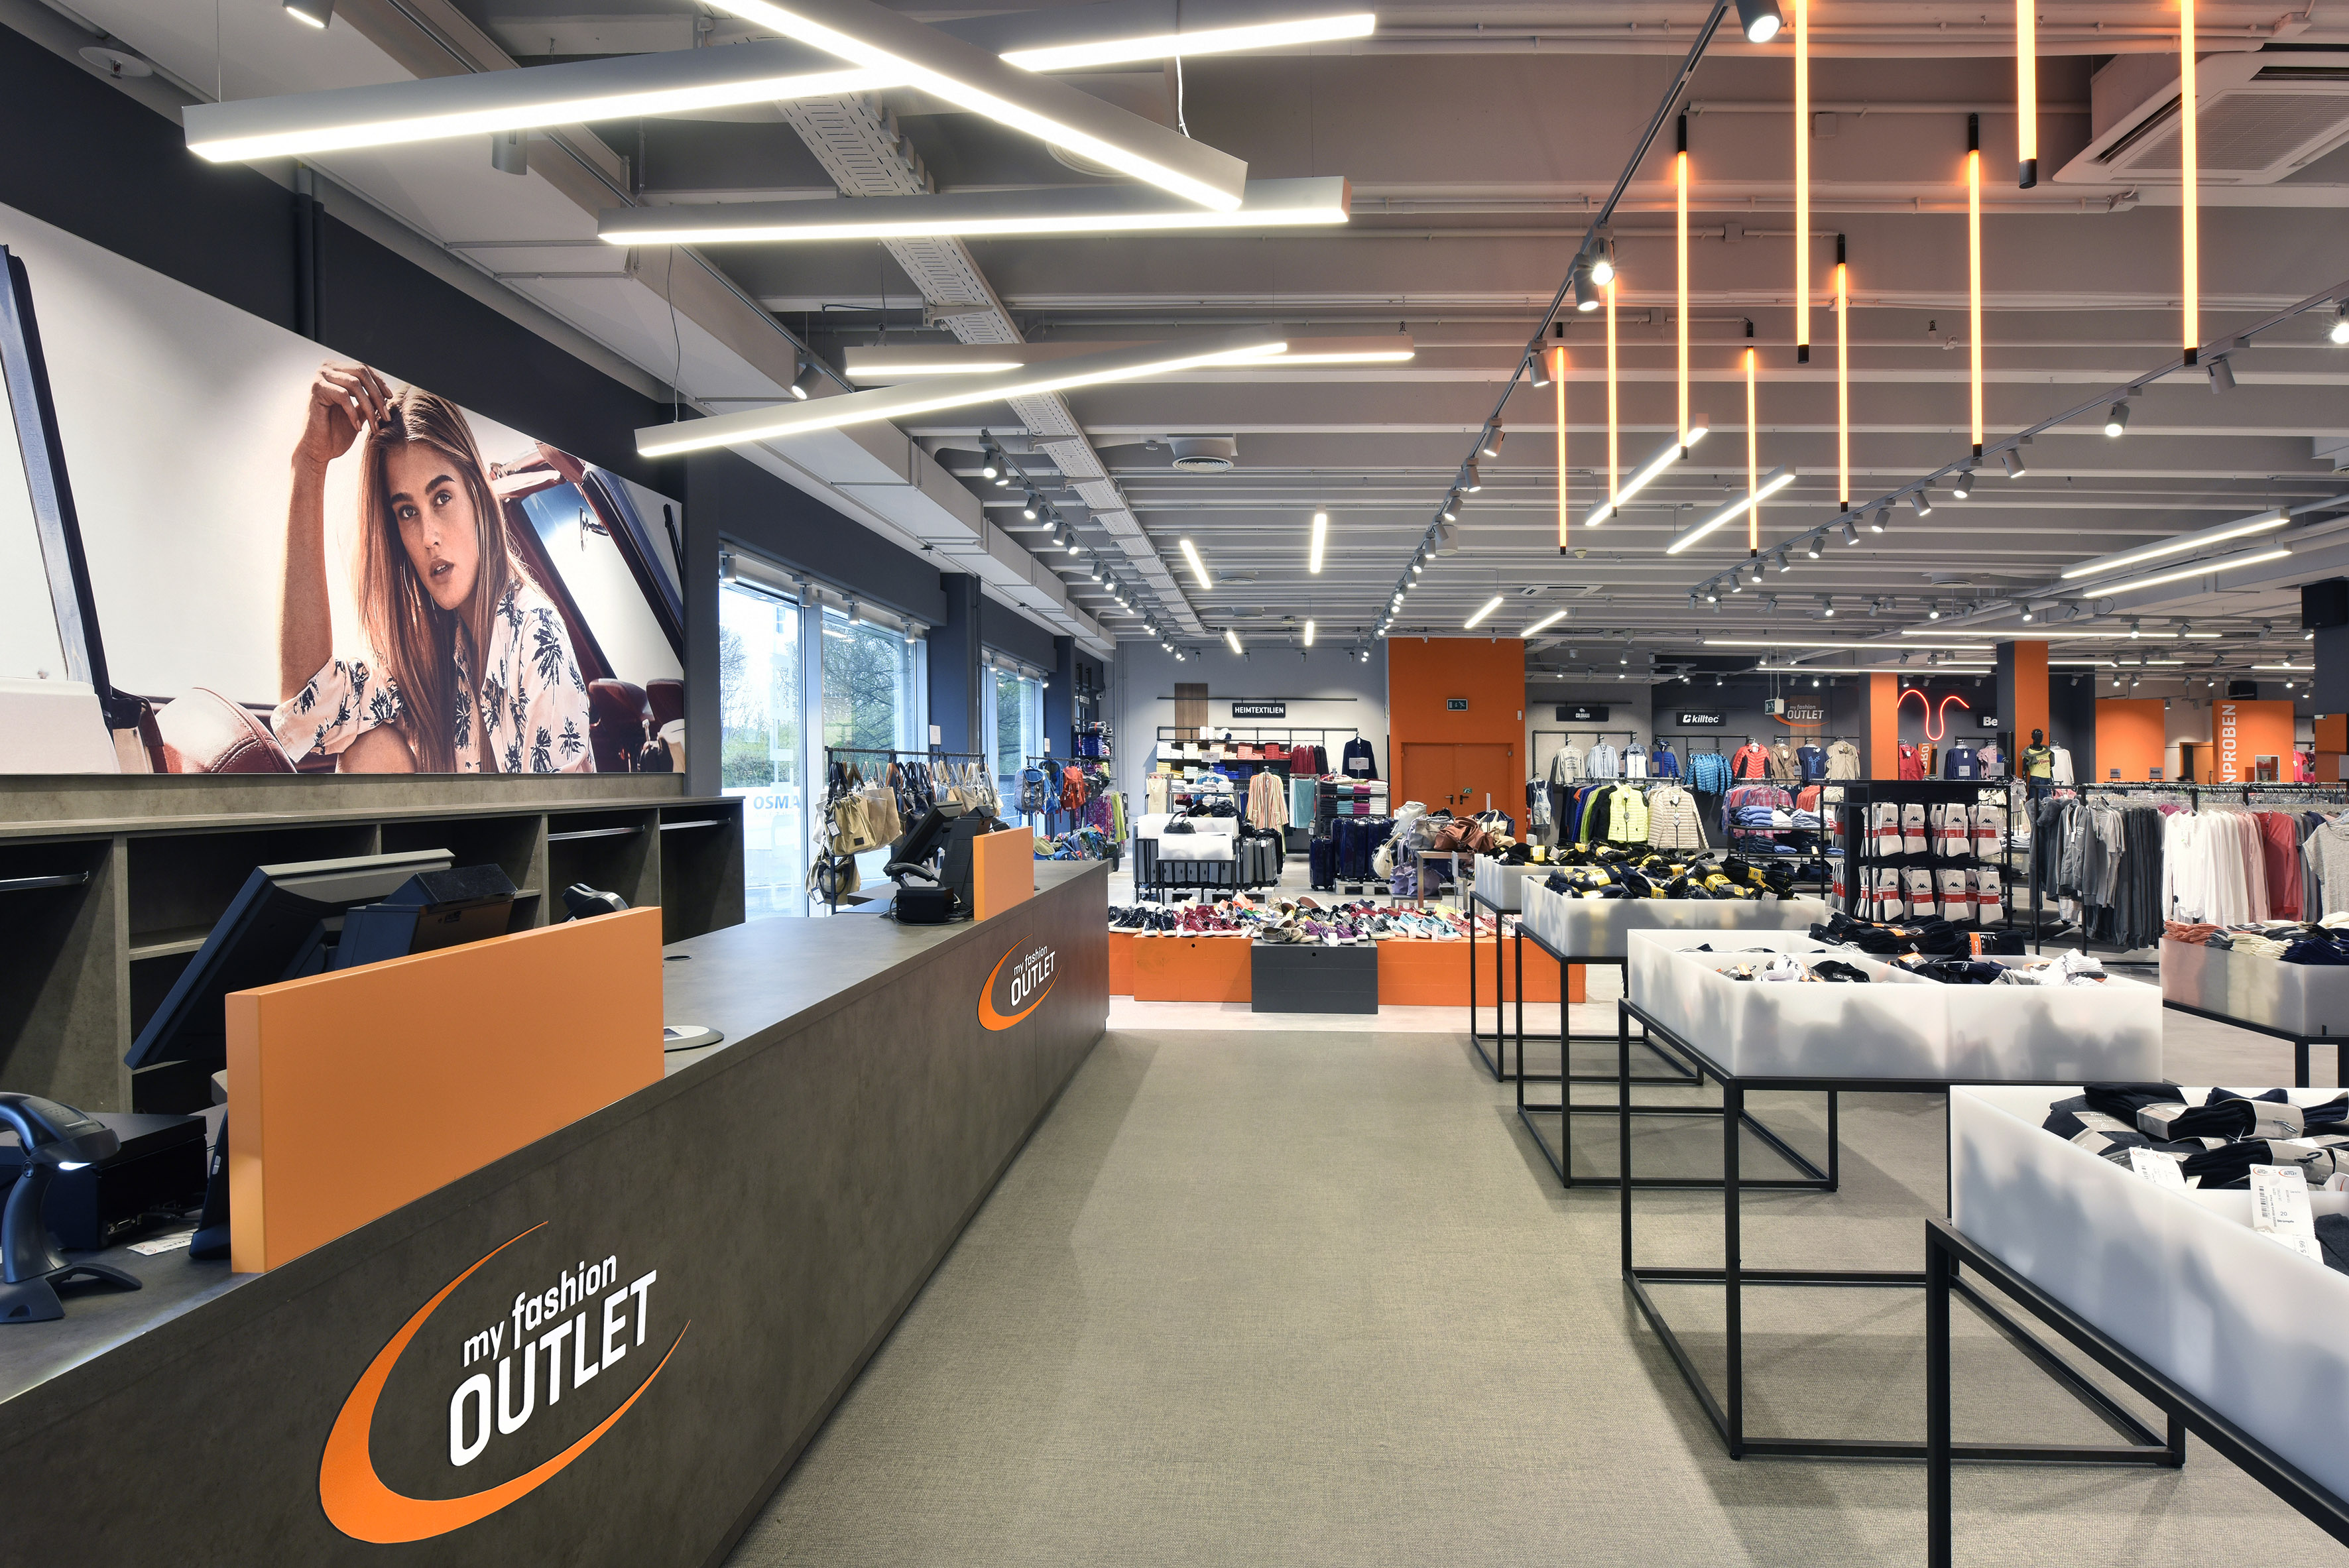 CB Lübeck Outlet Nette+Hartmann Hamburg Shopdesign Retail Design Store Fashion